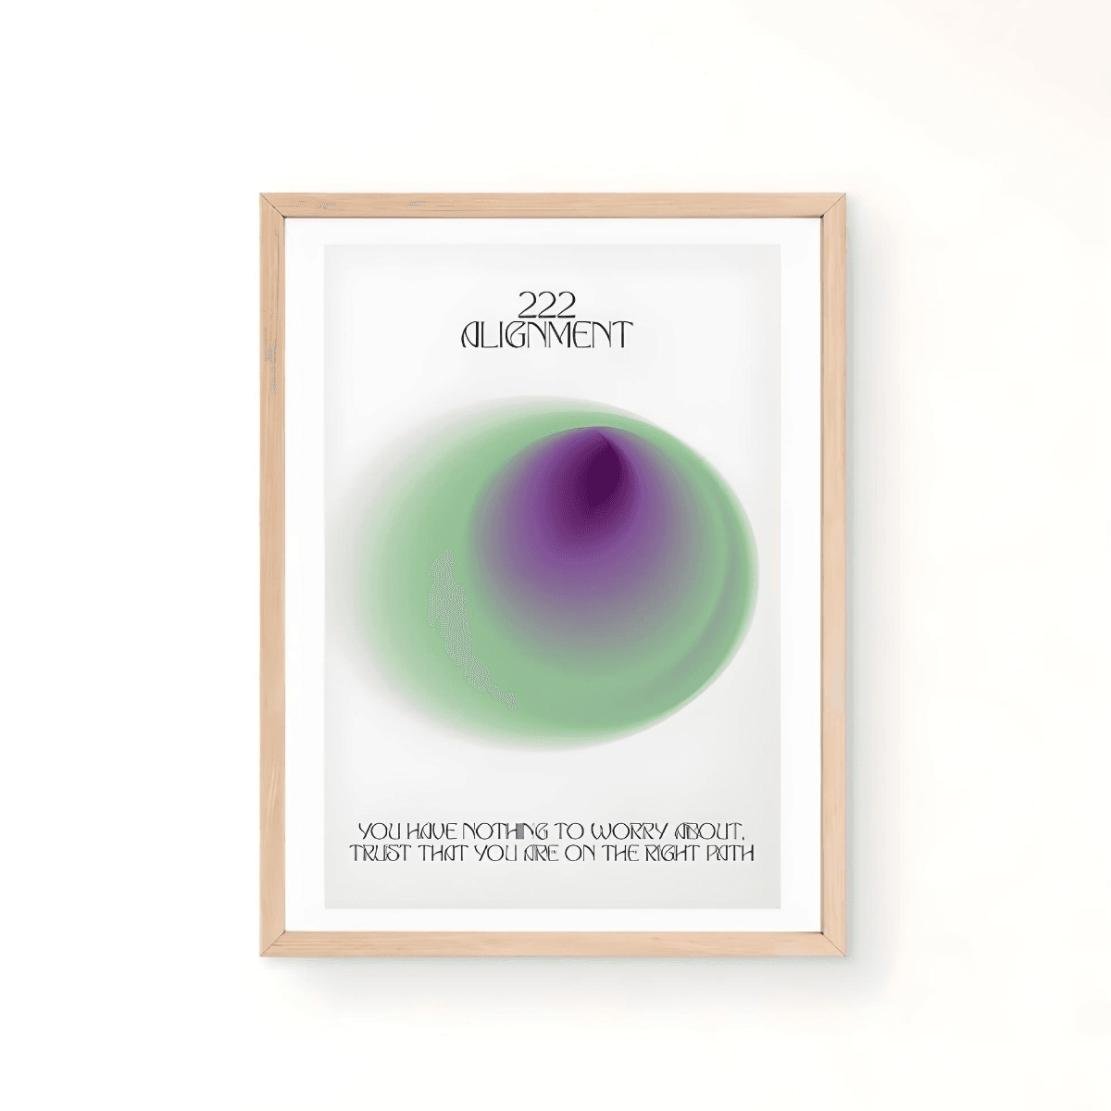 Angel number 222 poster, green purple aura orb art print